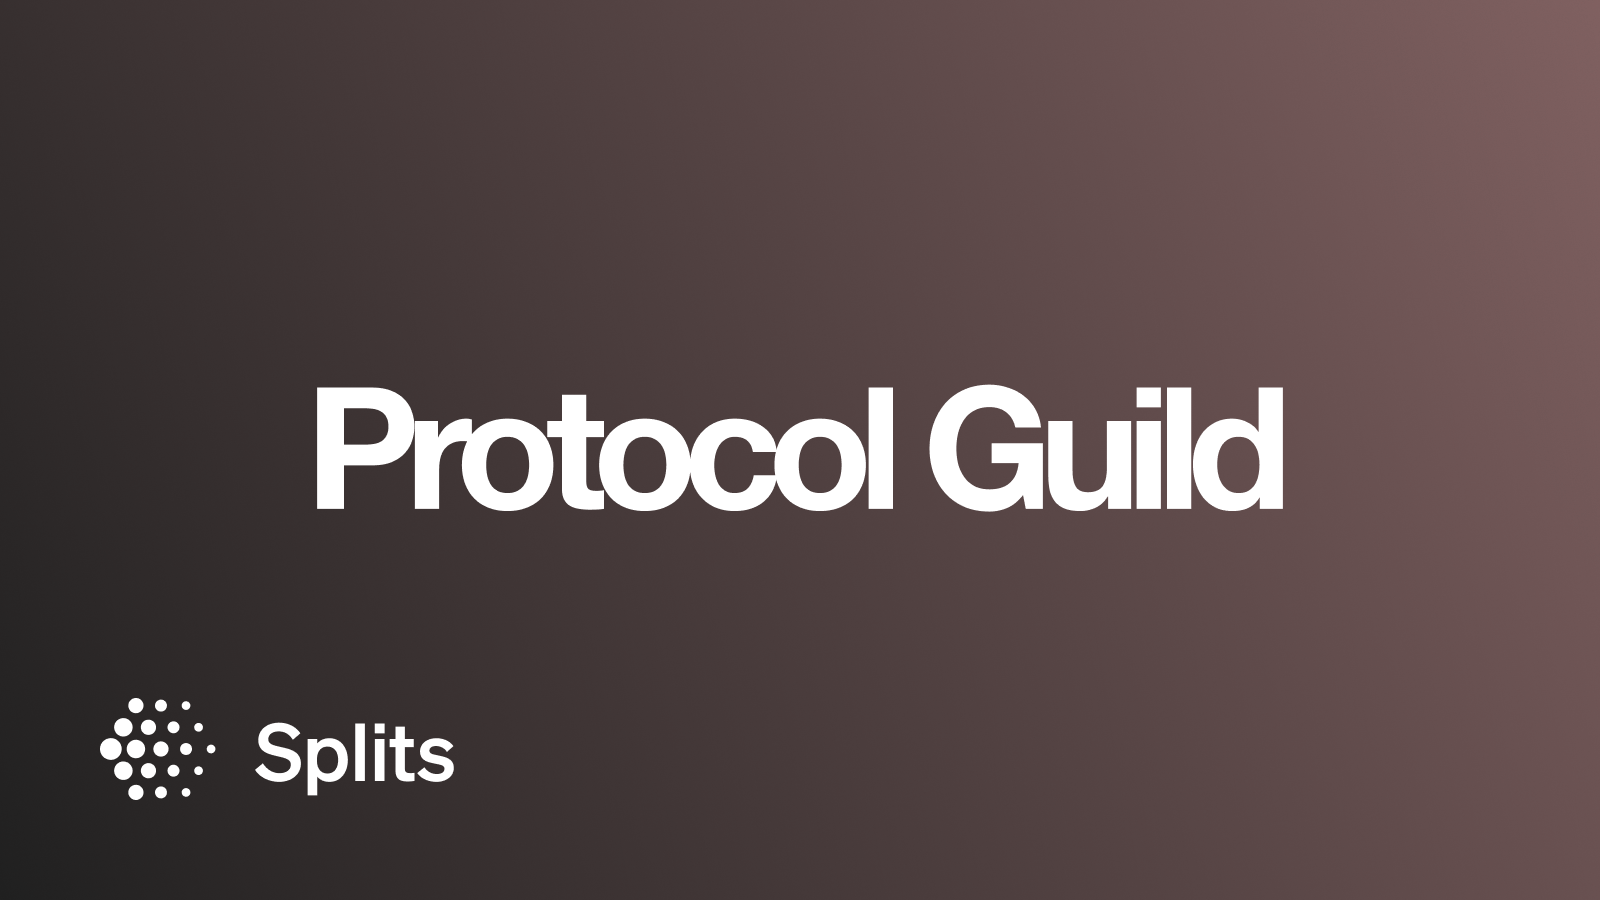 Feature image for Protocol Guild funds core protocol development via Splits